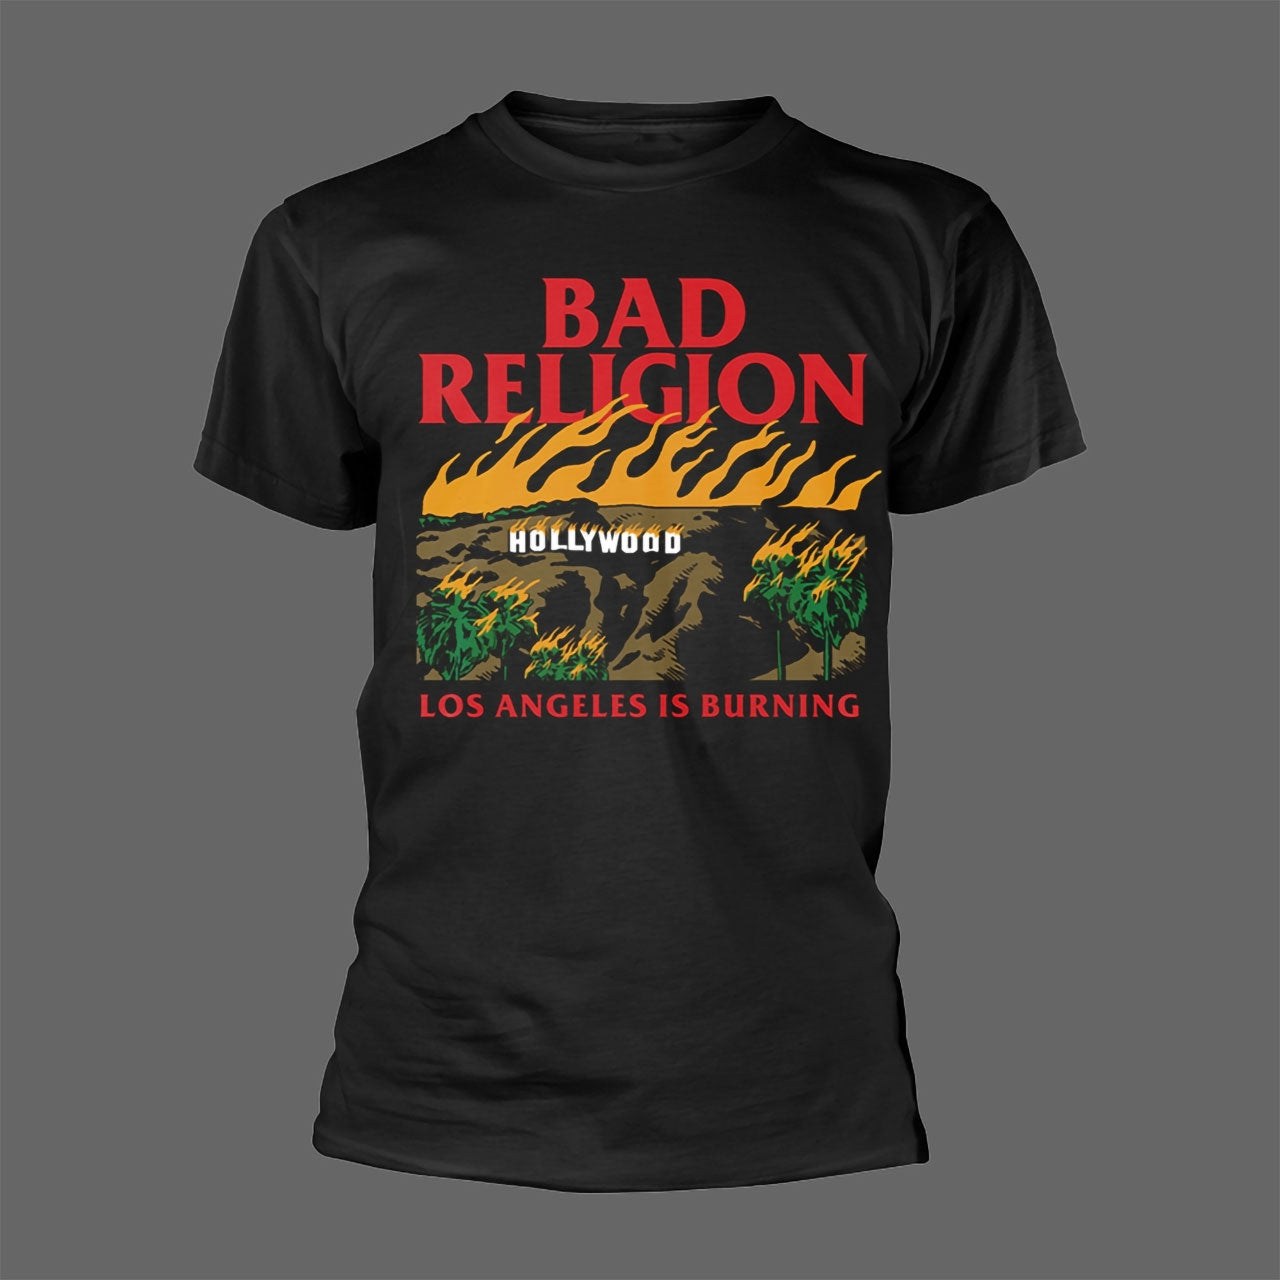 Bad Religion - Los Angeles is Burning (T-Shirt)